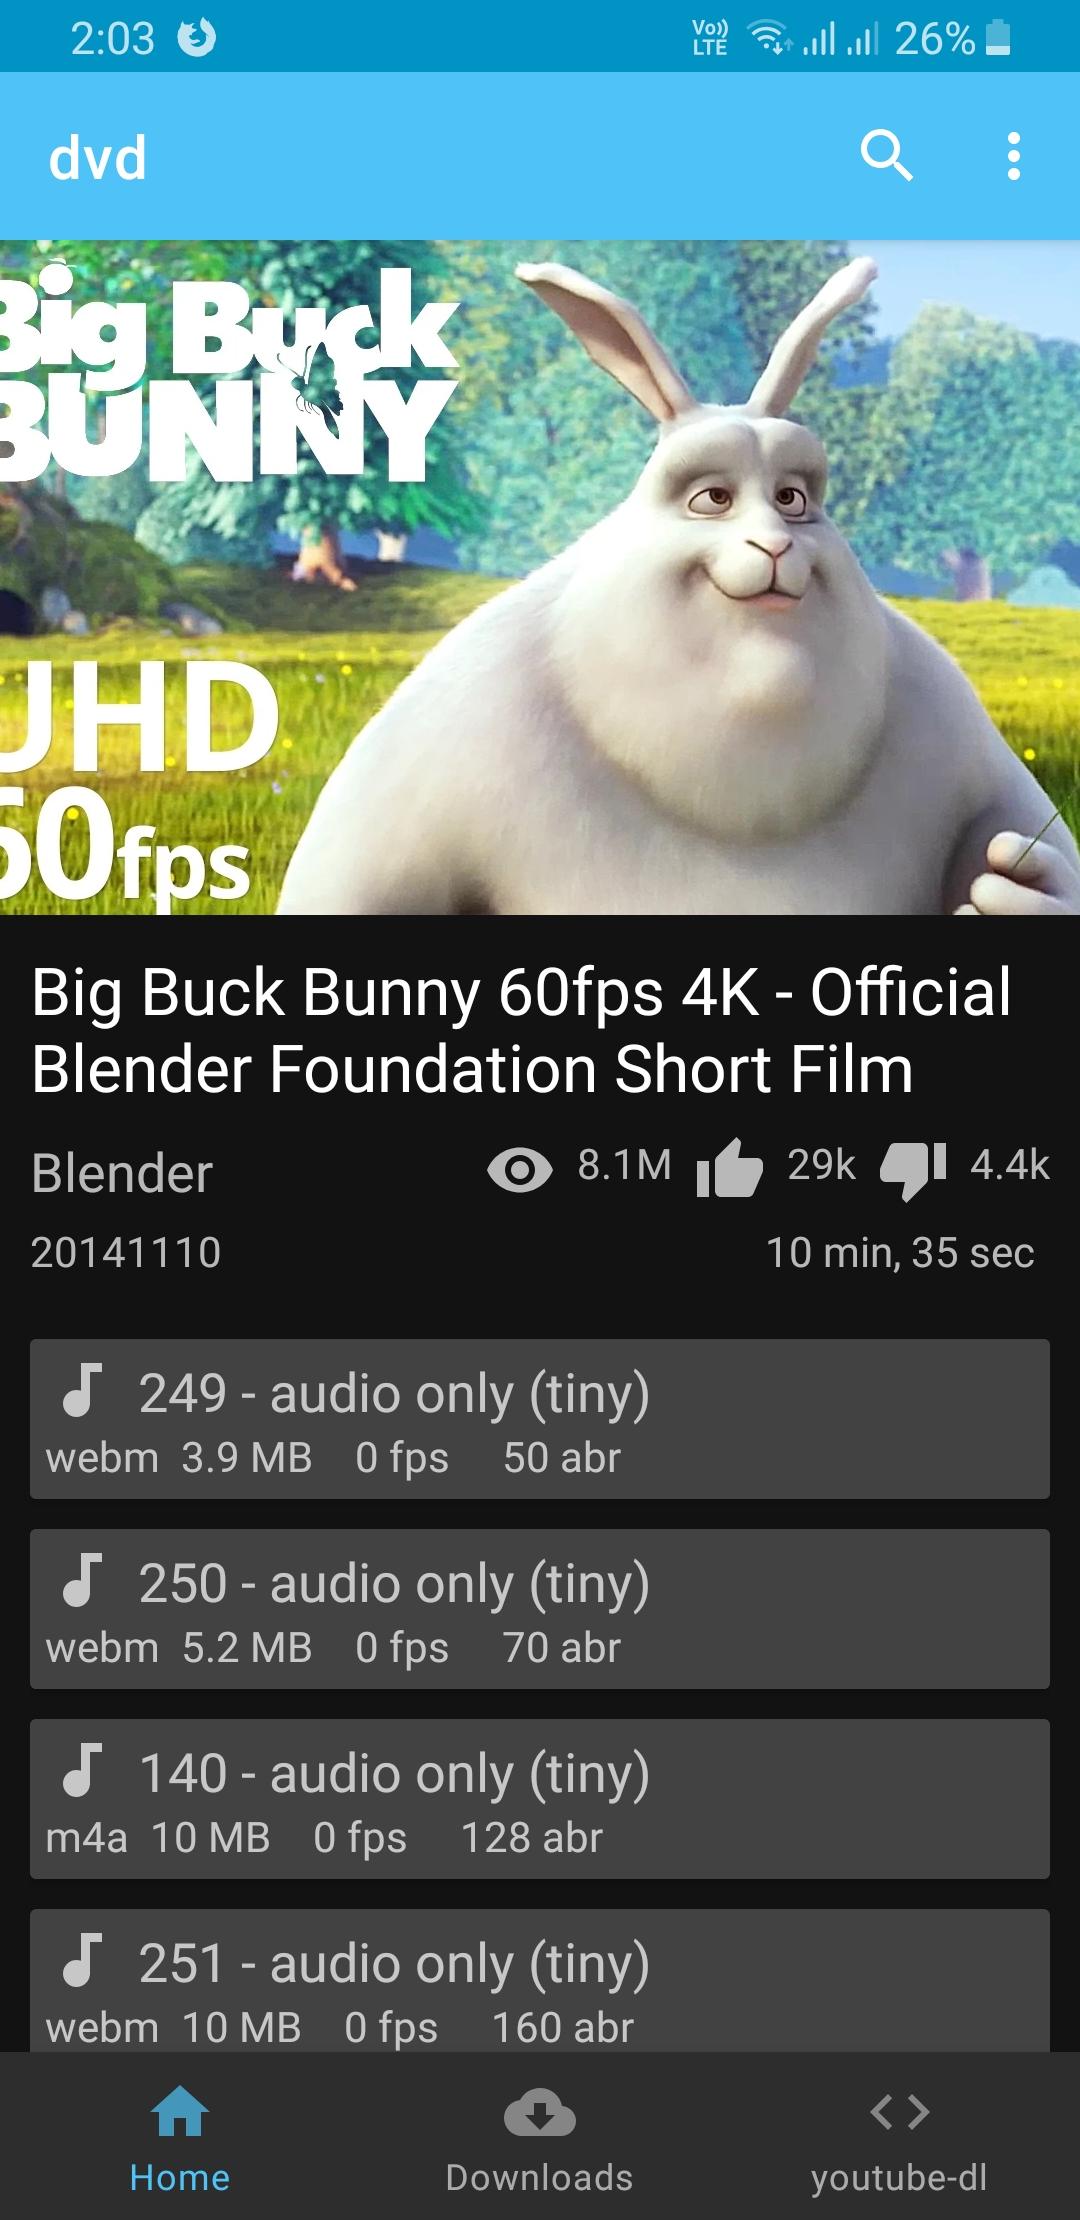 Screenshot of dvd